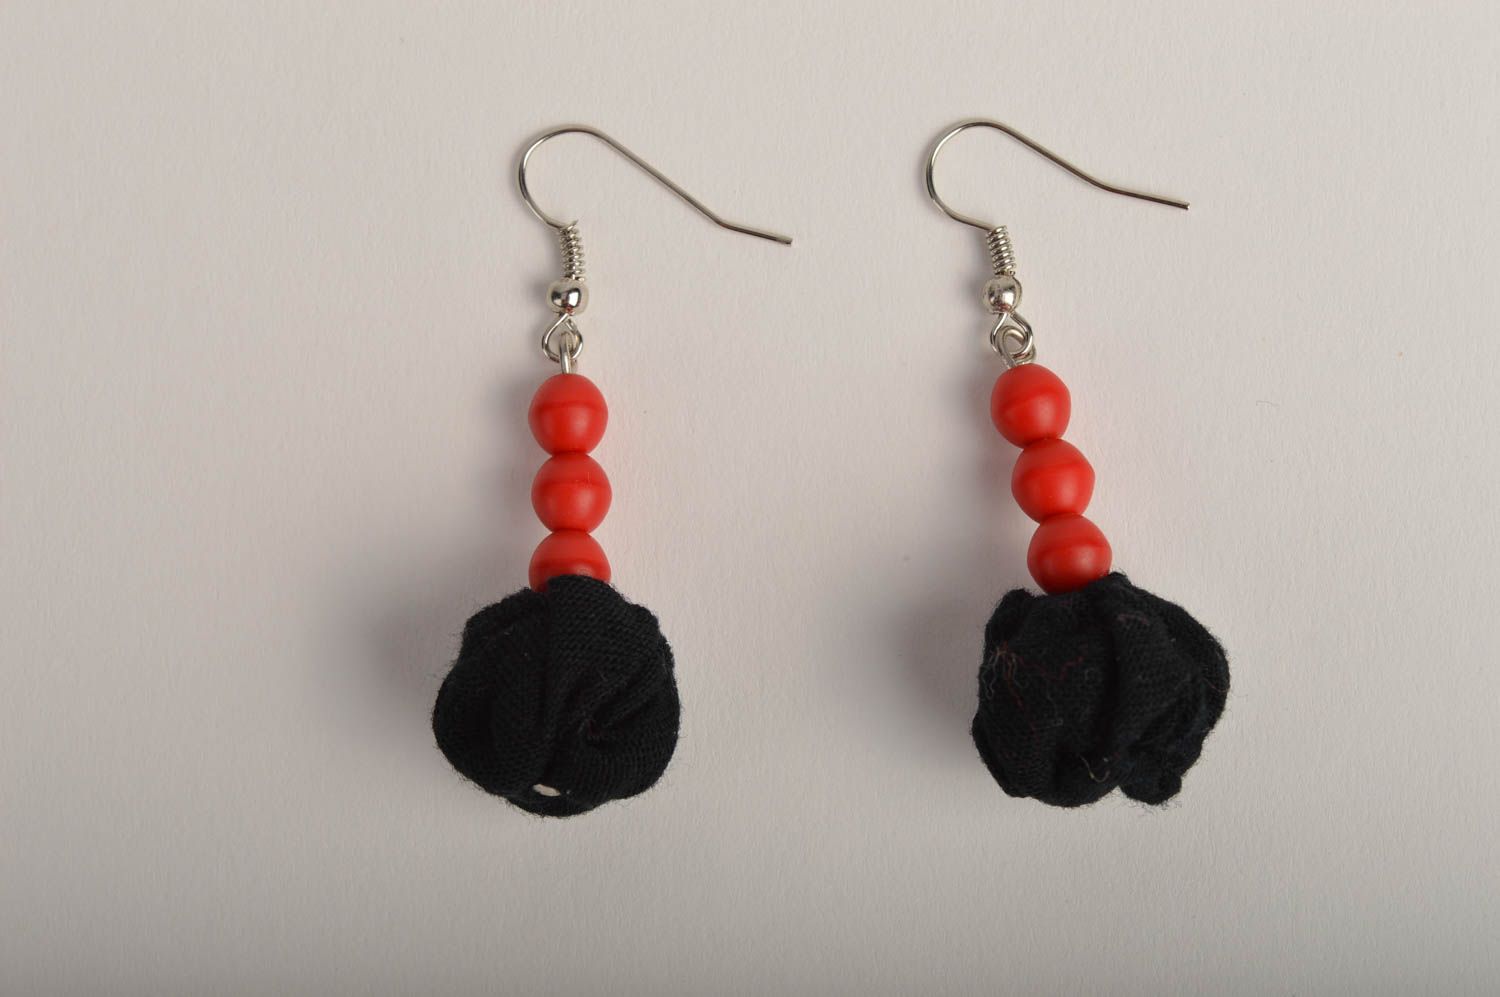 Handmade stylish earrings textile black earrings elegant evening jewelry photo 3